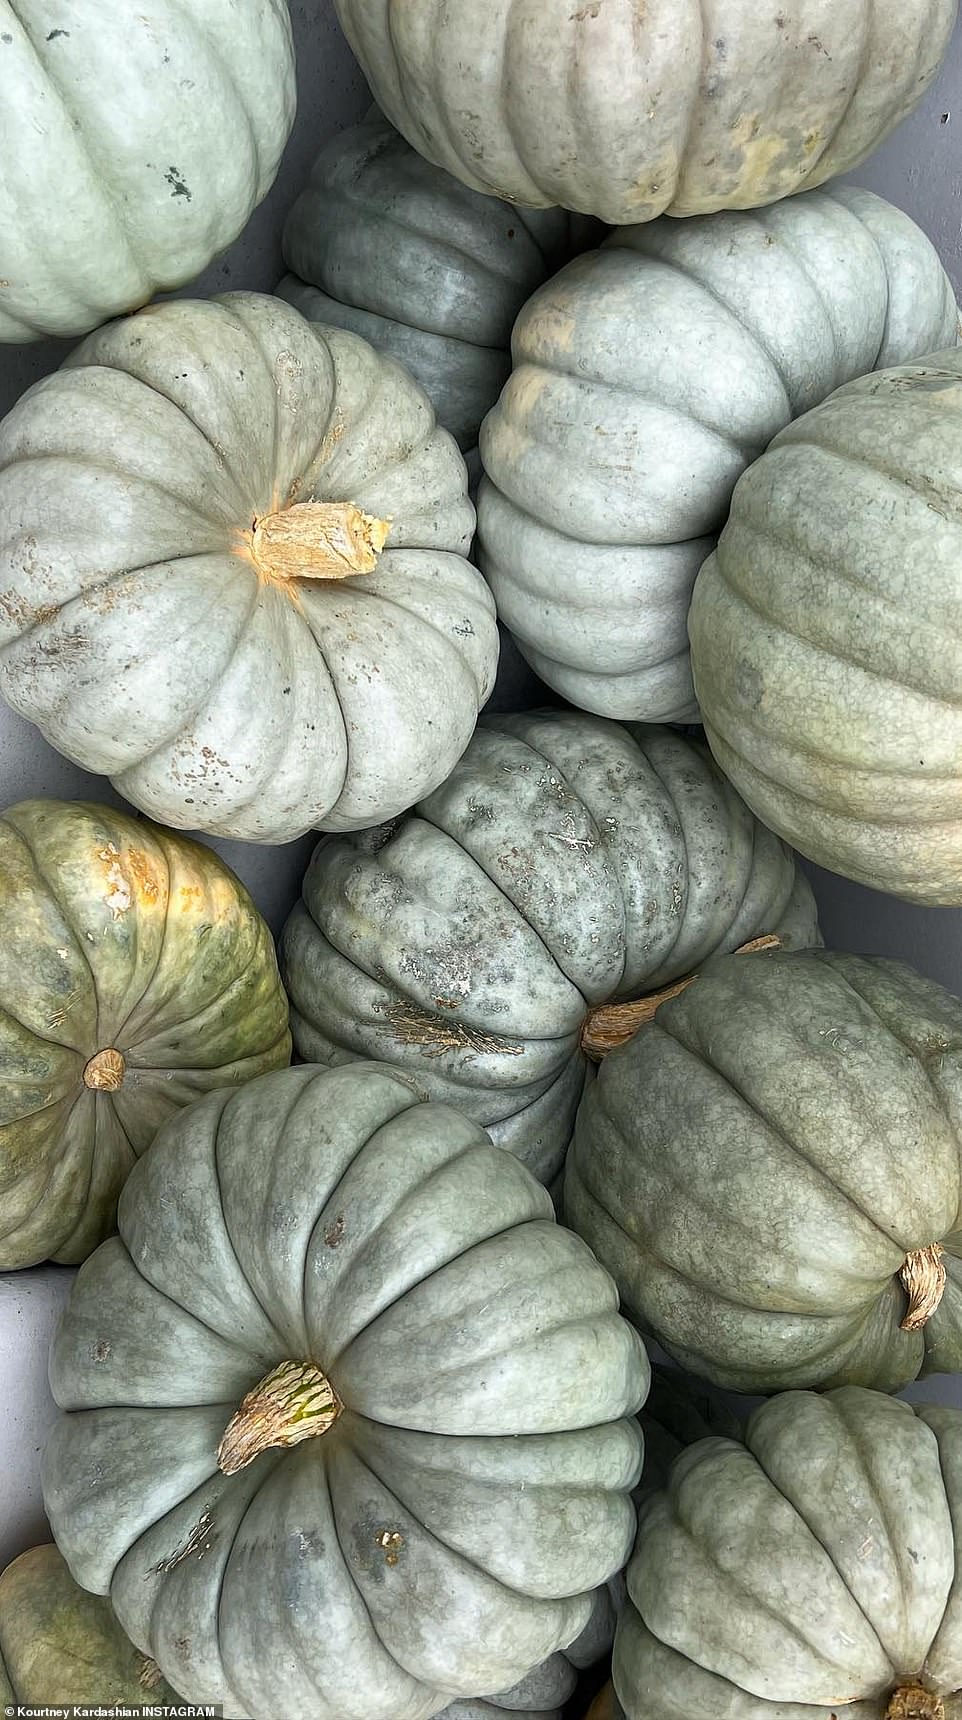 Kourtney revealed her green pumpkins